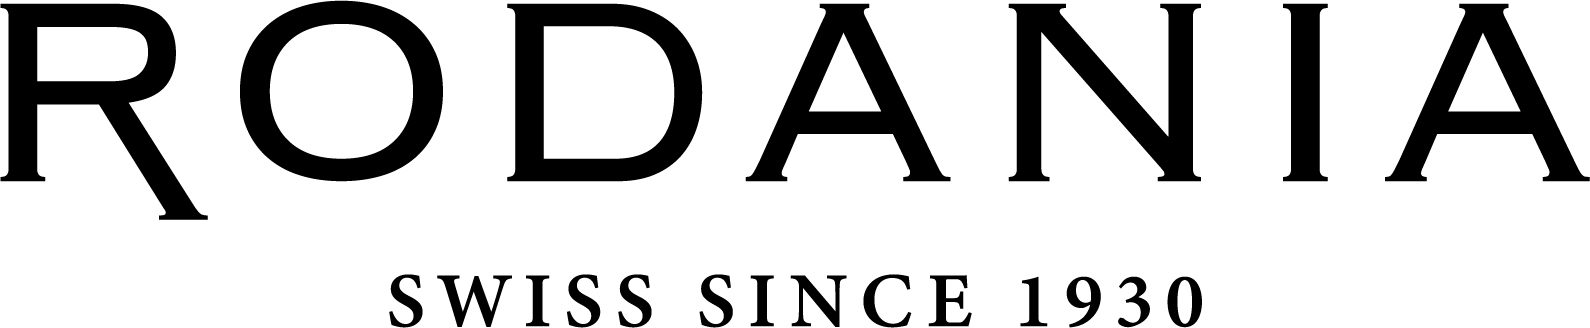 RODANIA_nieuw logo